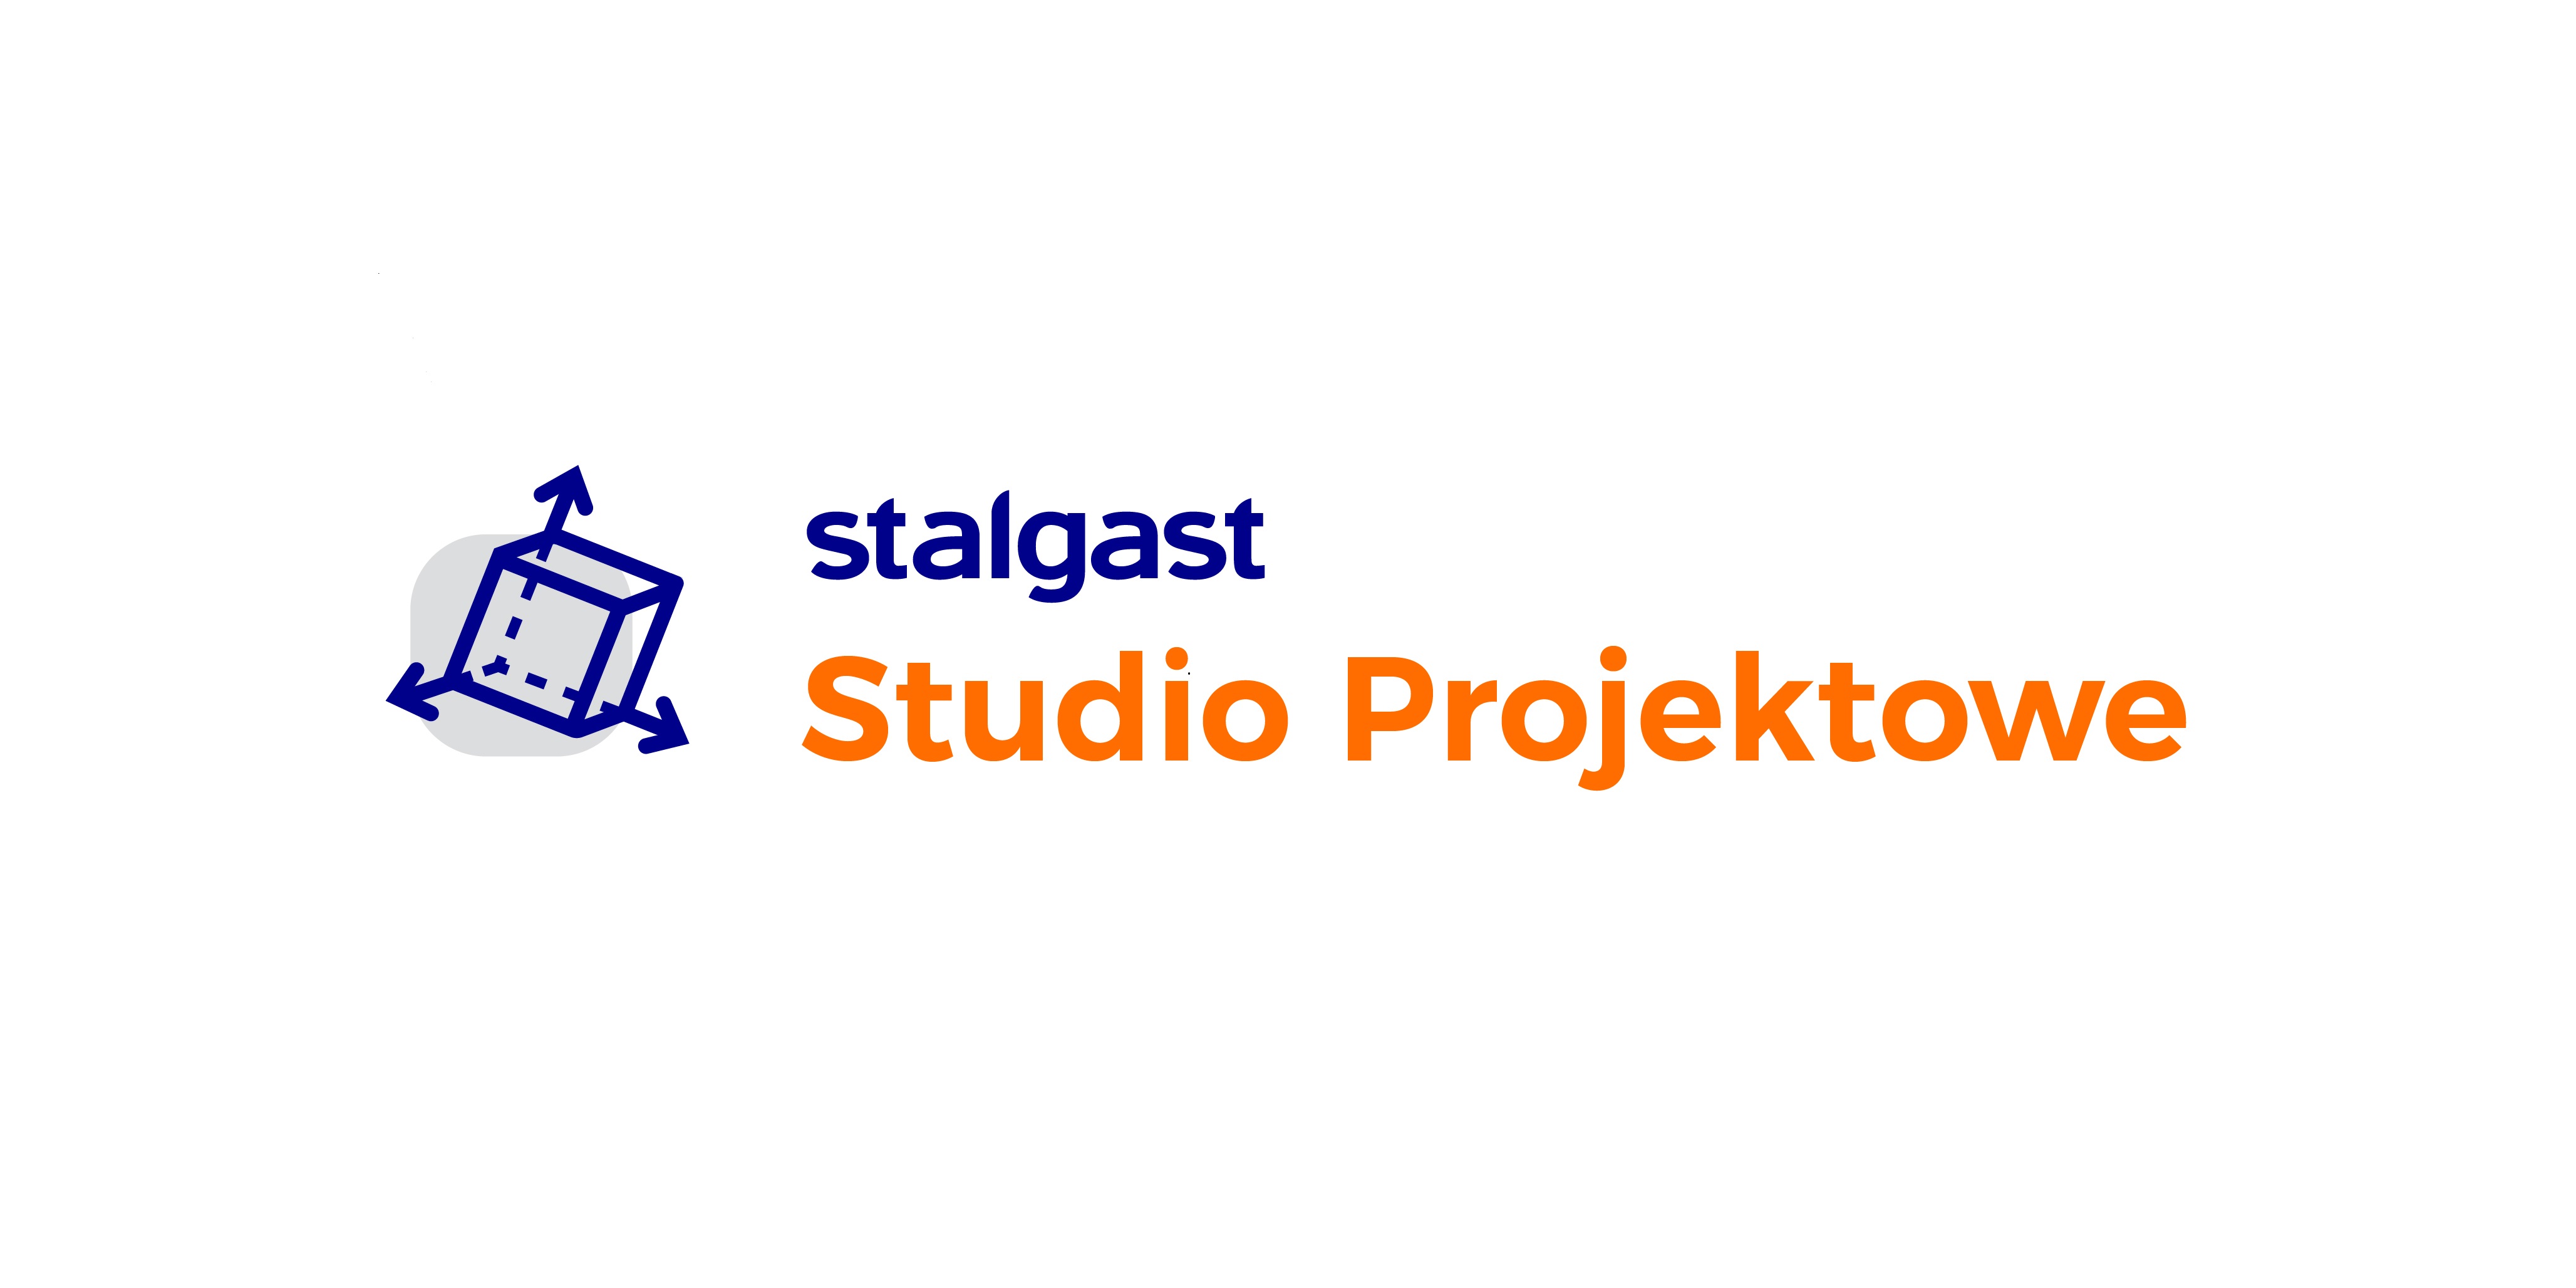 https://stalgast.com/media/custom/upload/logo_studio_projektowe.jpg